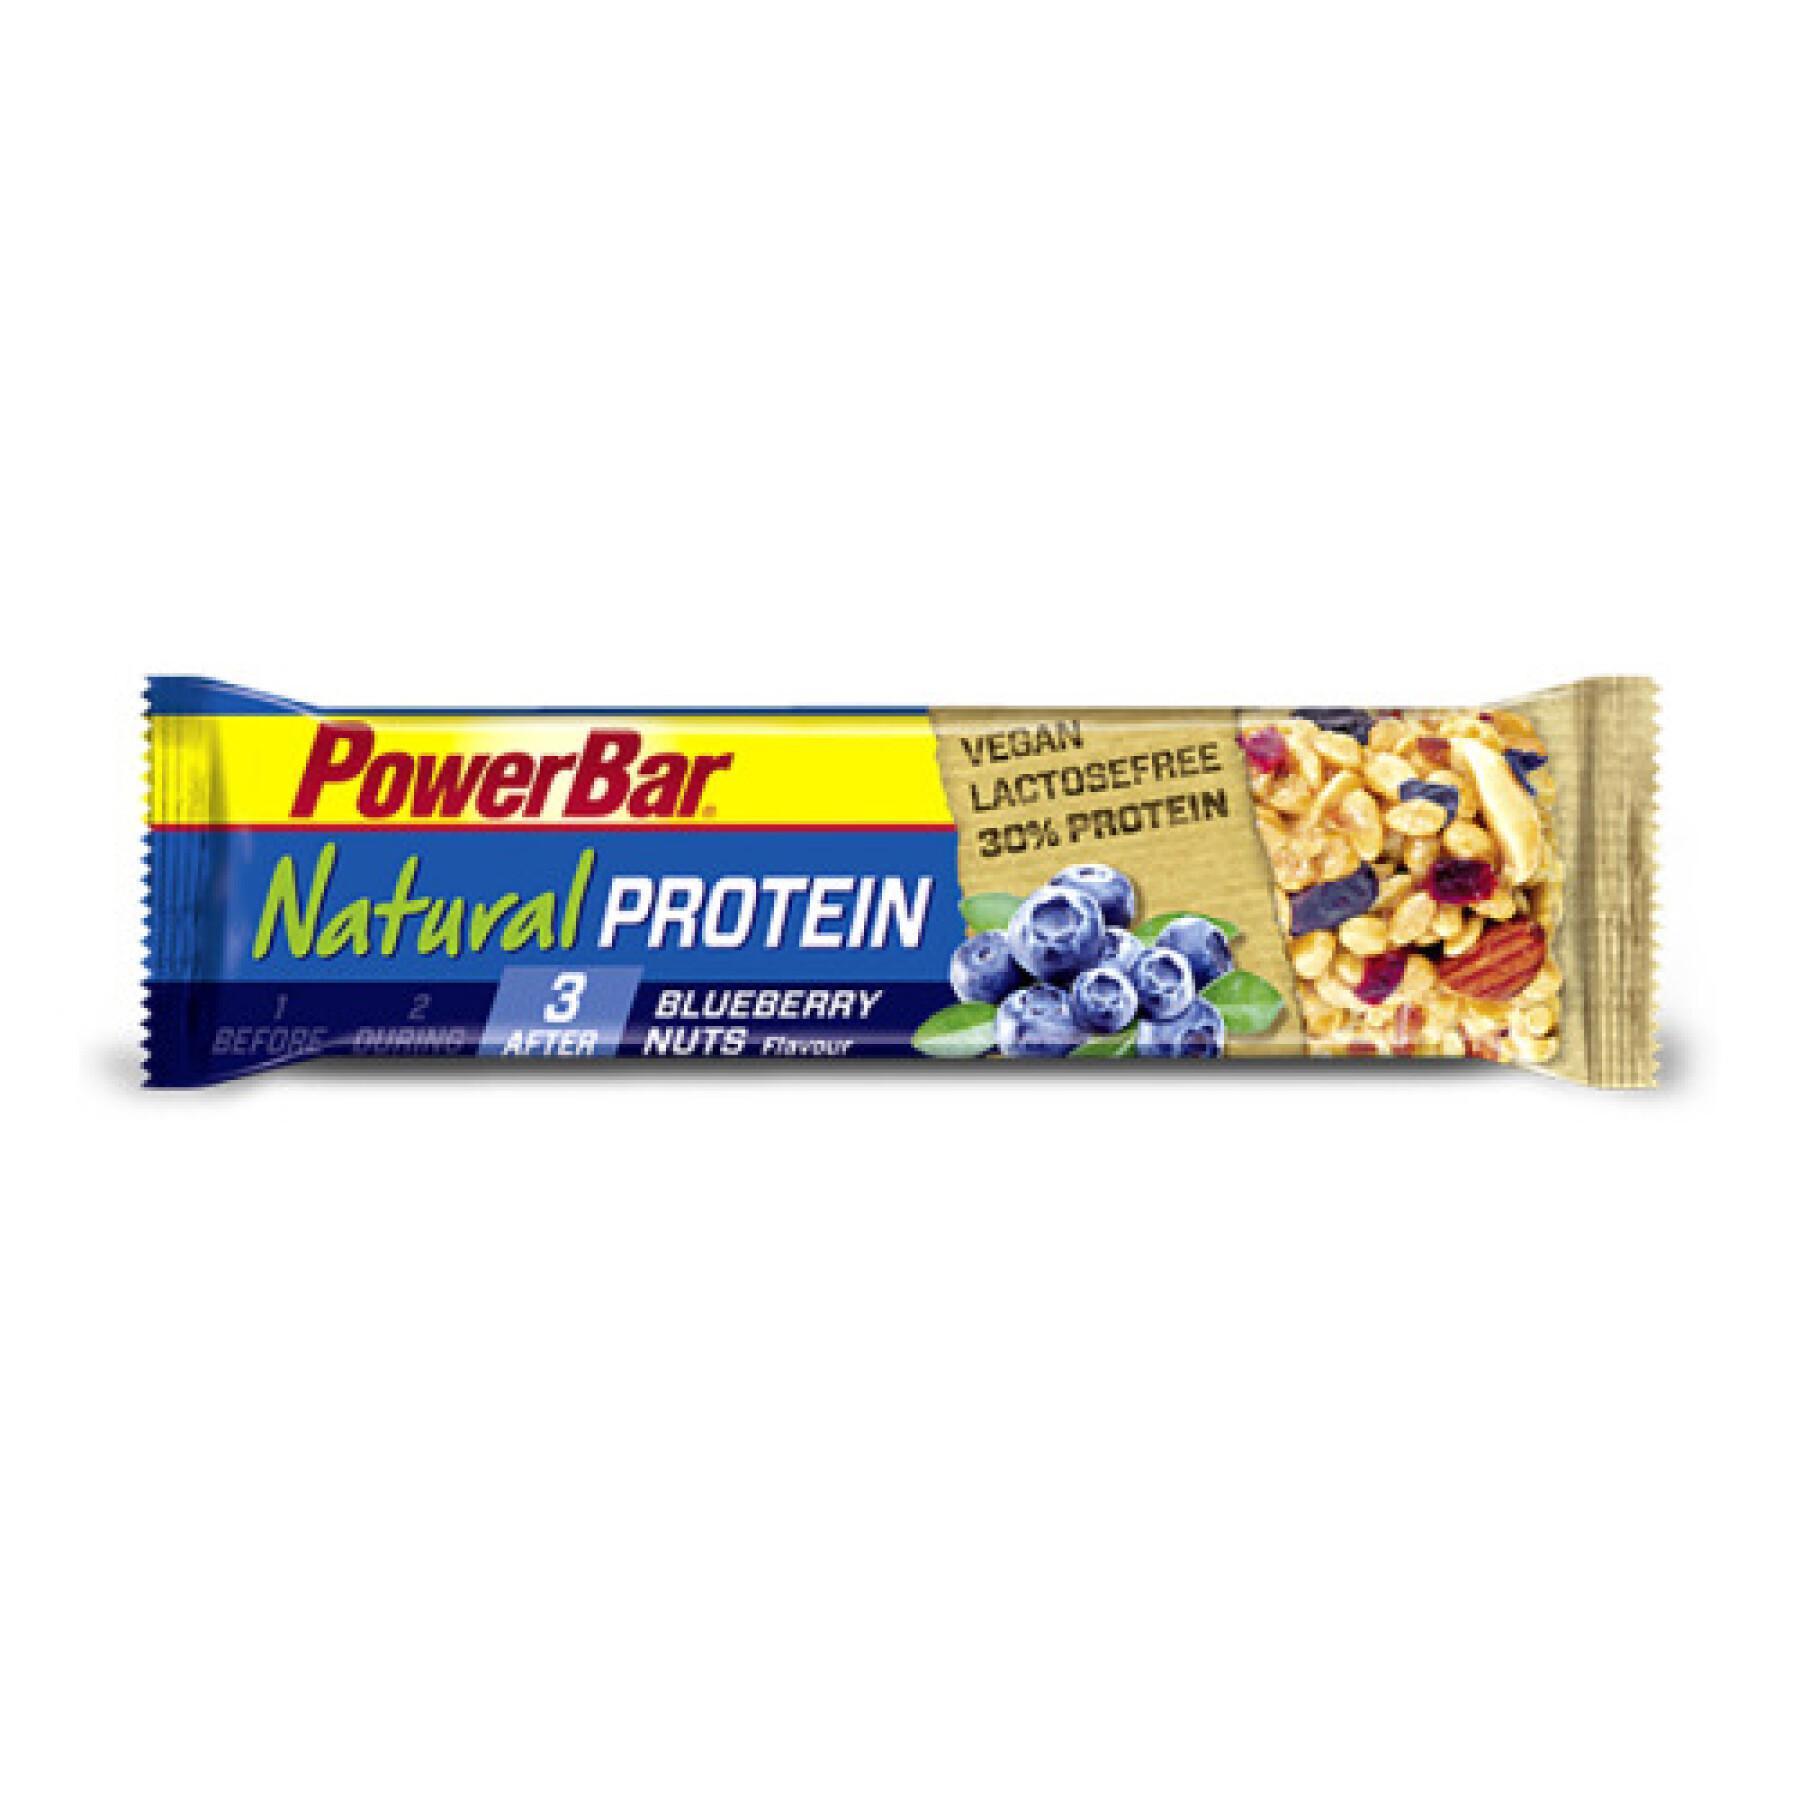 Lote de 24 barras PowerBar Natural Protein Vegan - Blueberry Bliss